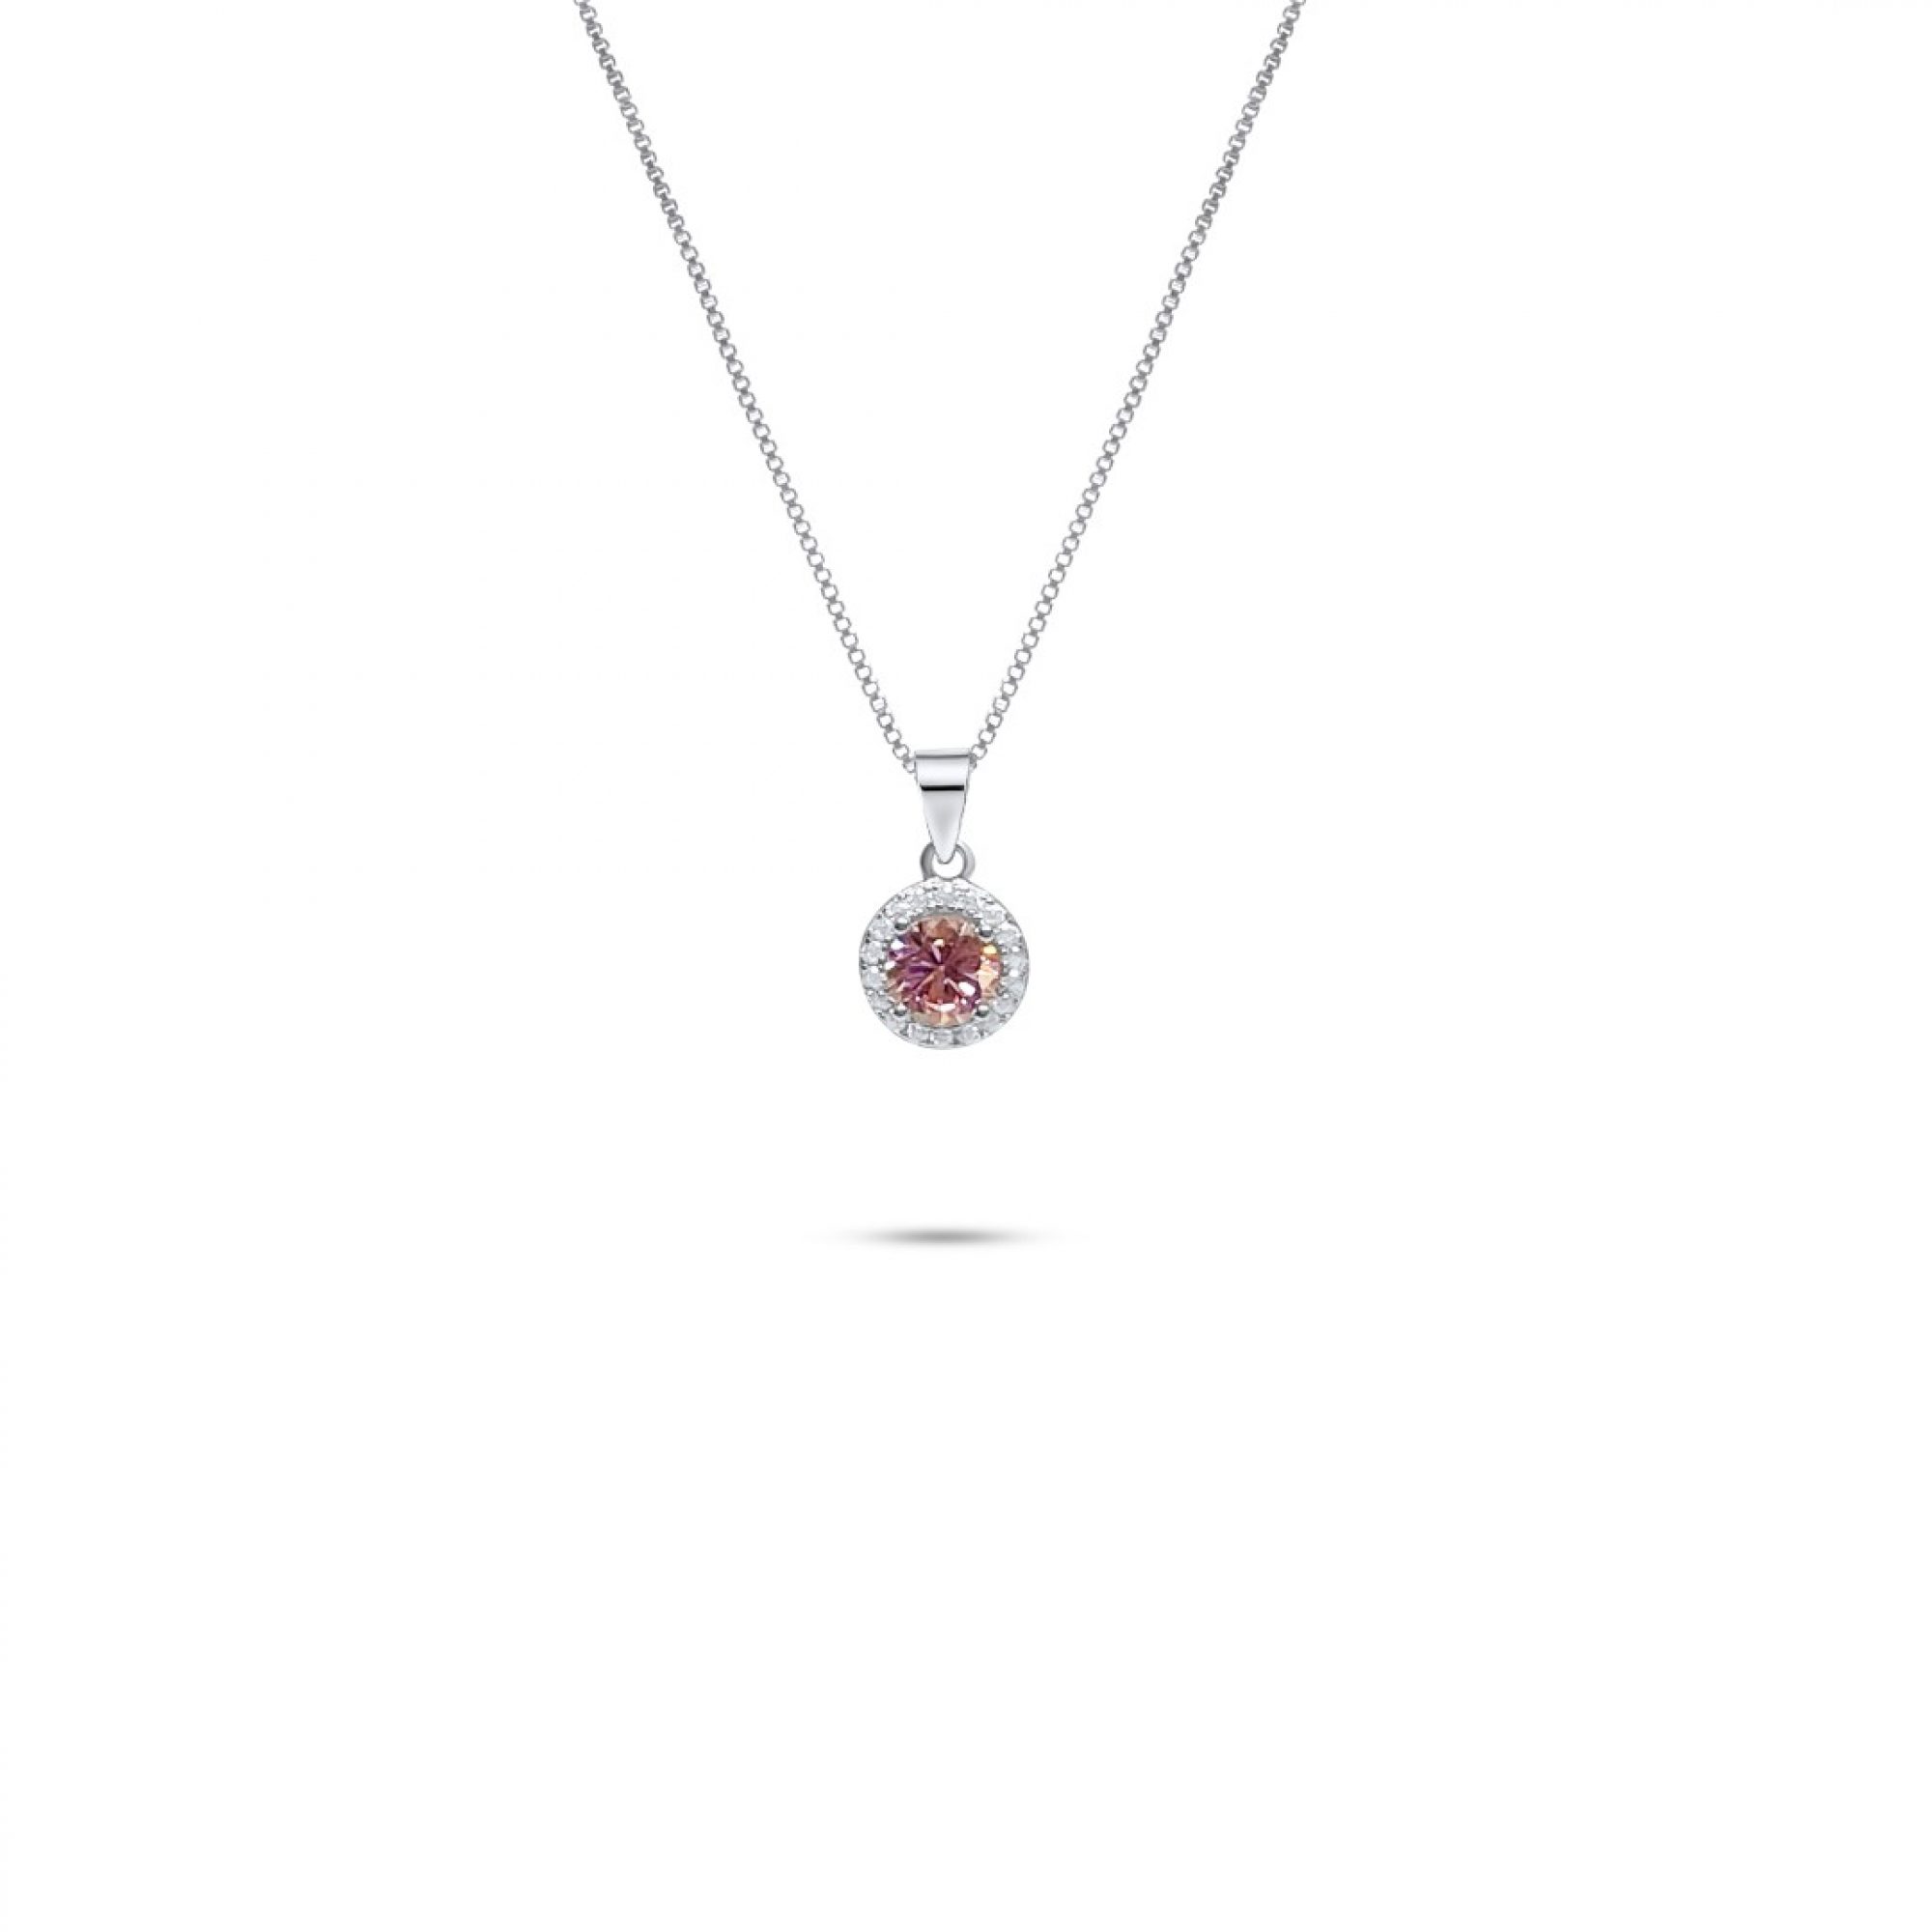 Necklace with pink quartz and zircon stones